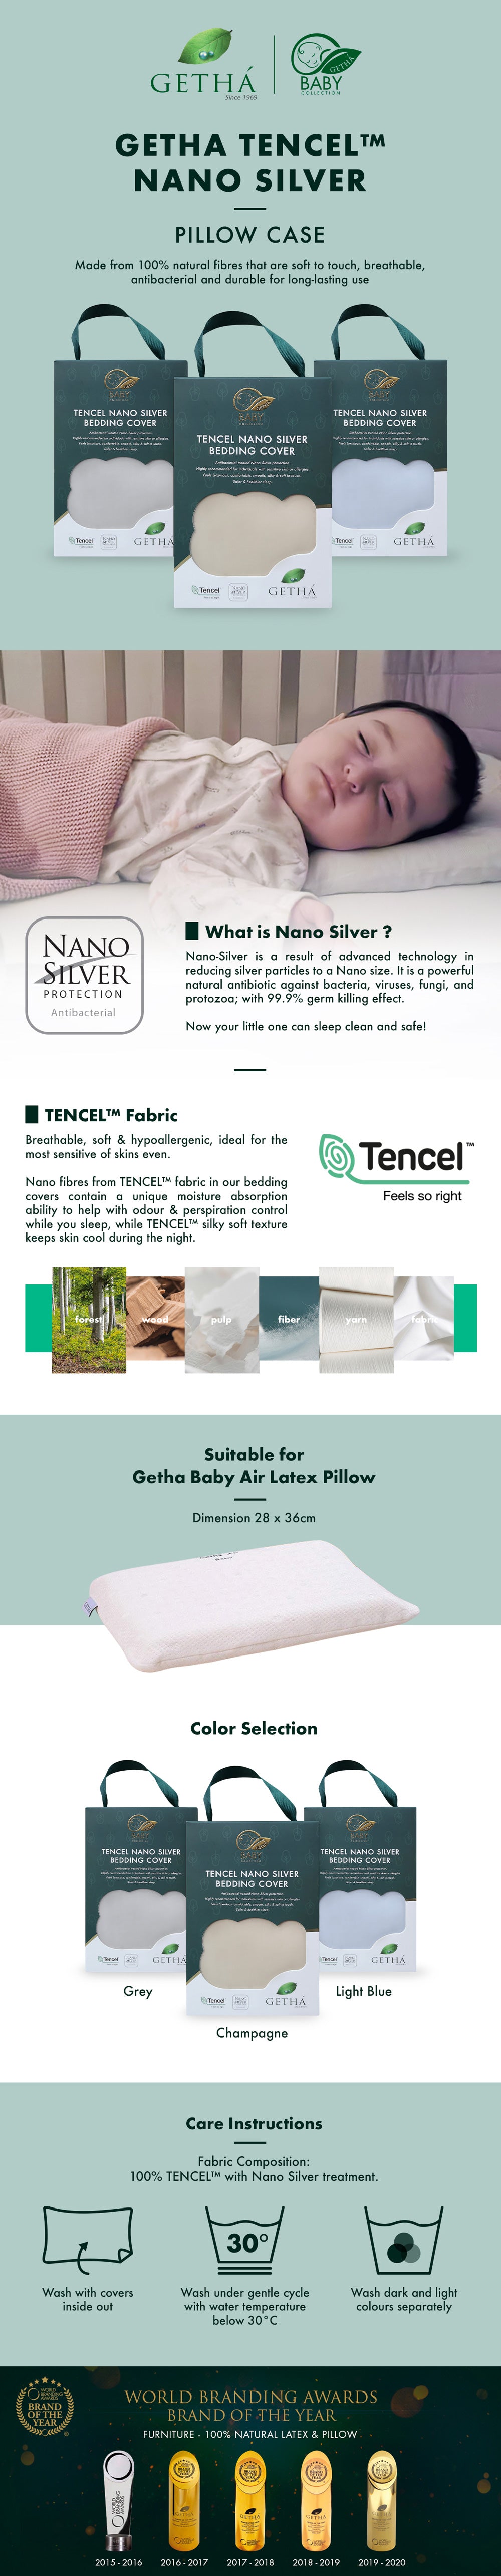 Getha Tencel Nano Silver Pillow Case – Baby Air Latex Pillow